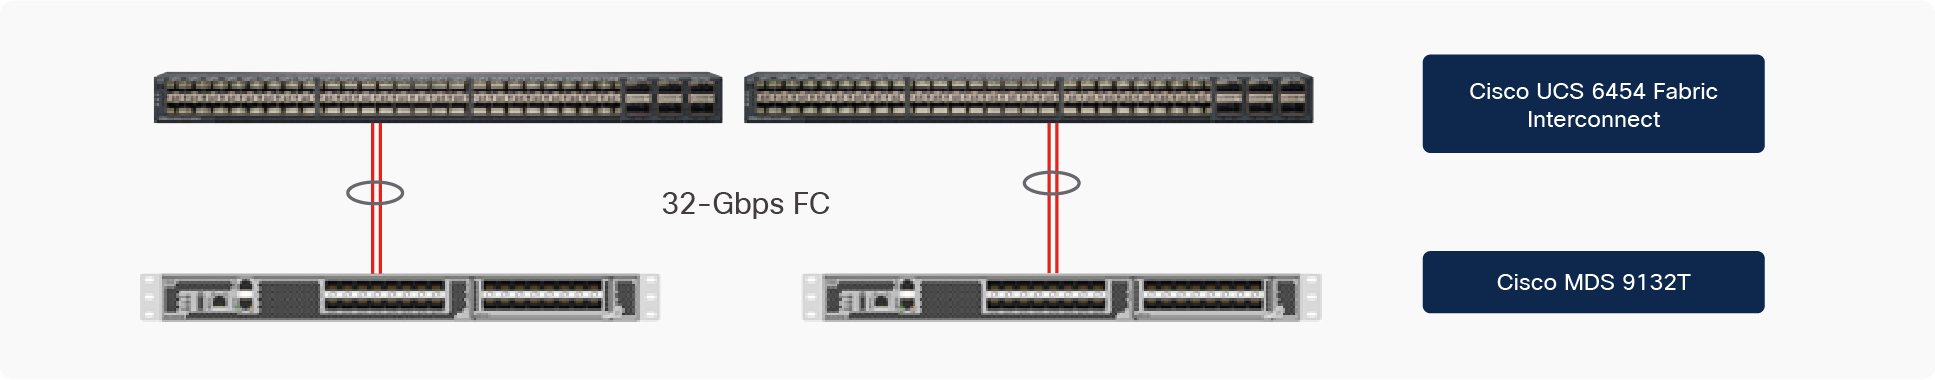 Cisco UCS 6454 FI SAN connectivity